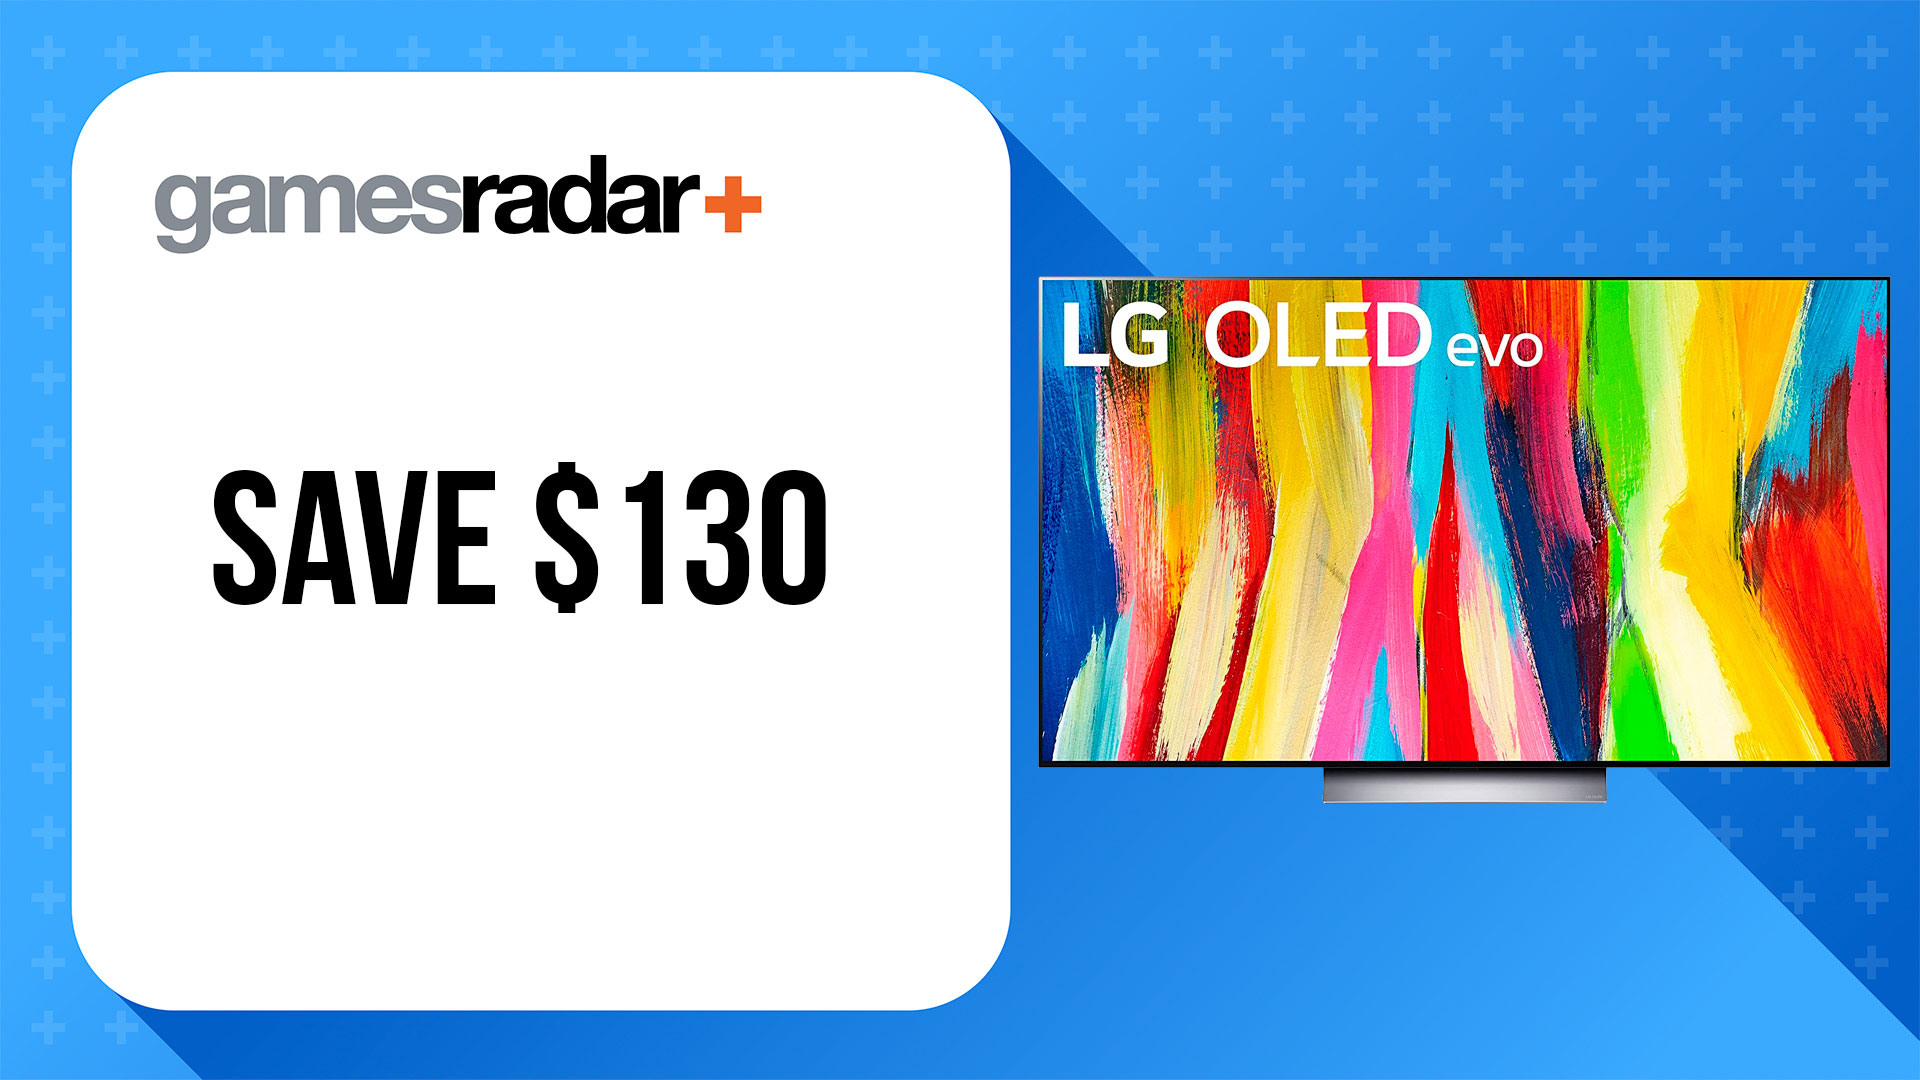 LG C2 OLED deal - save $130